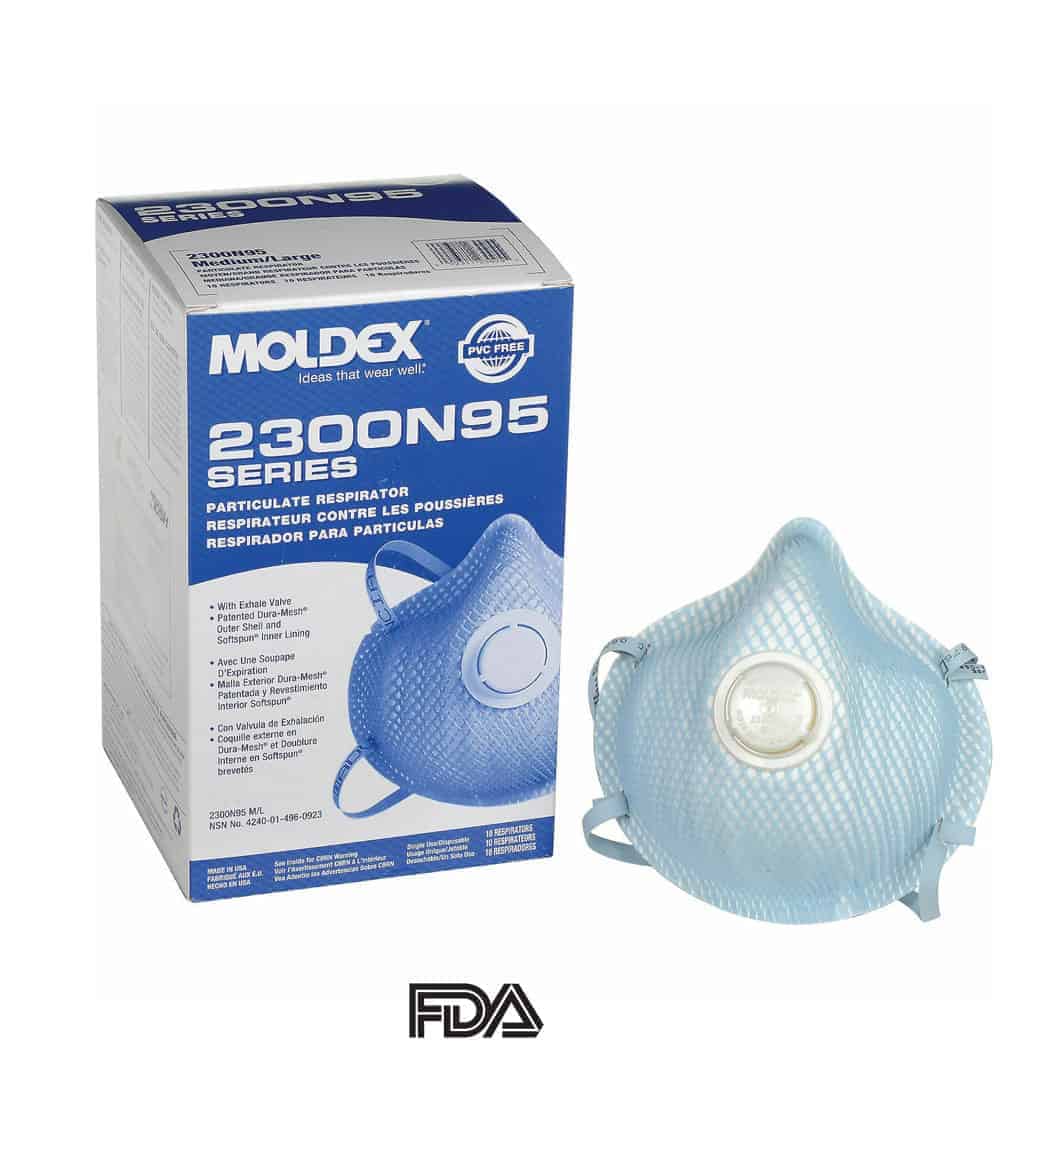 Moldex 2300 N95 mask